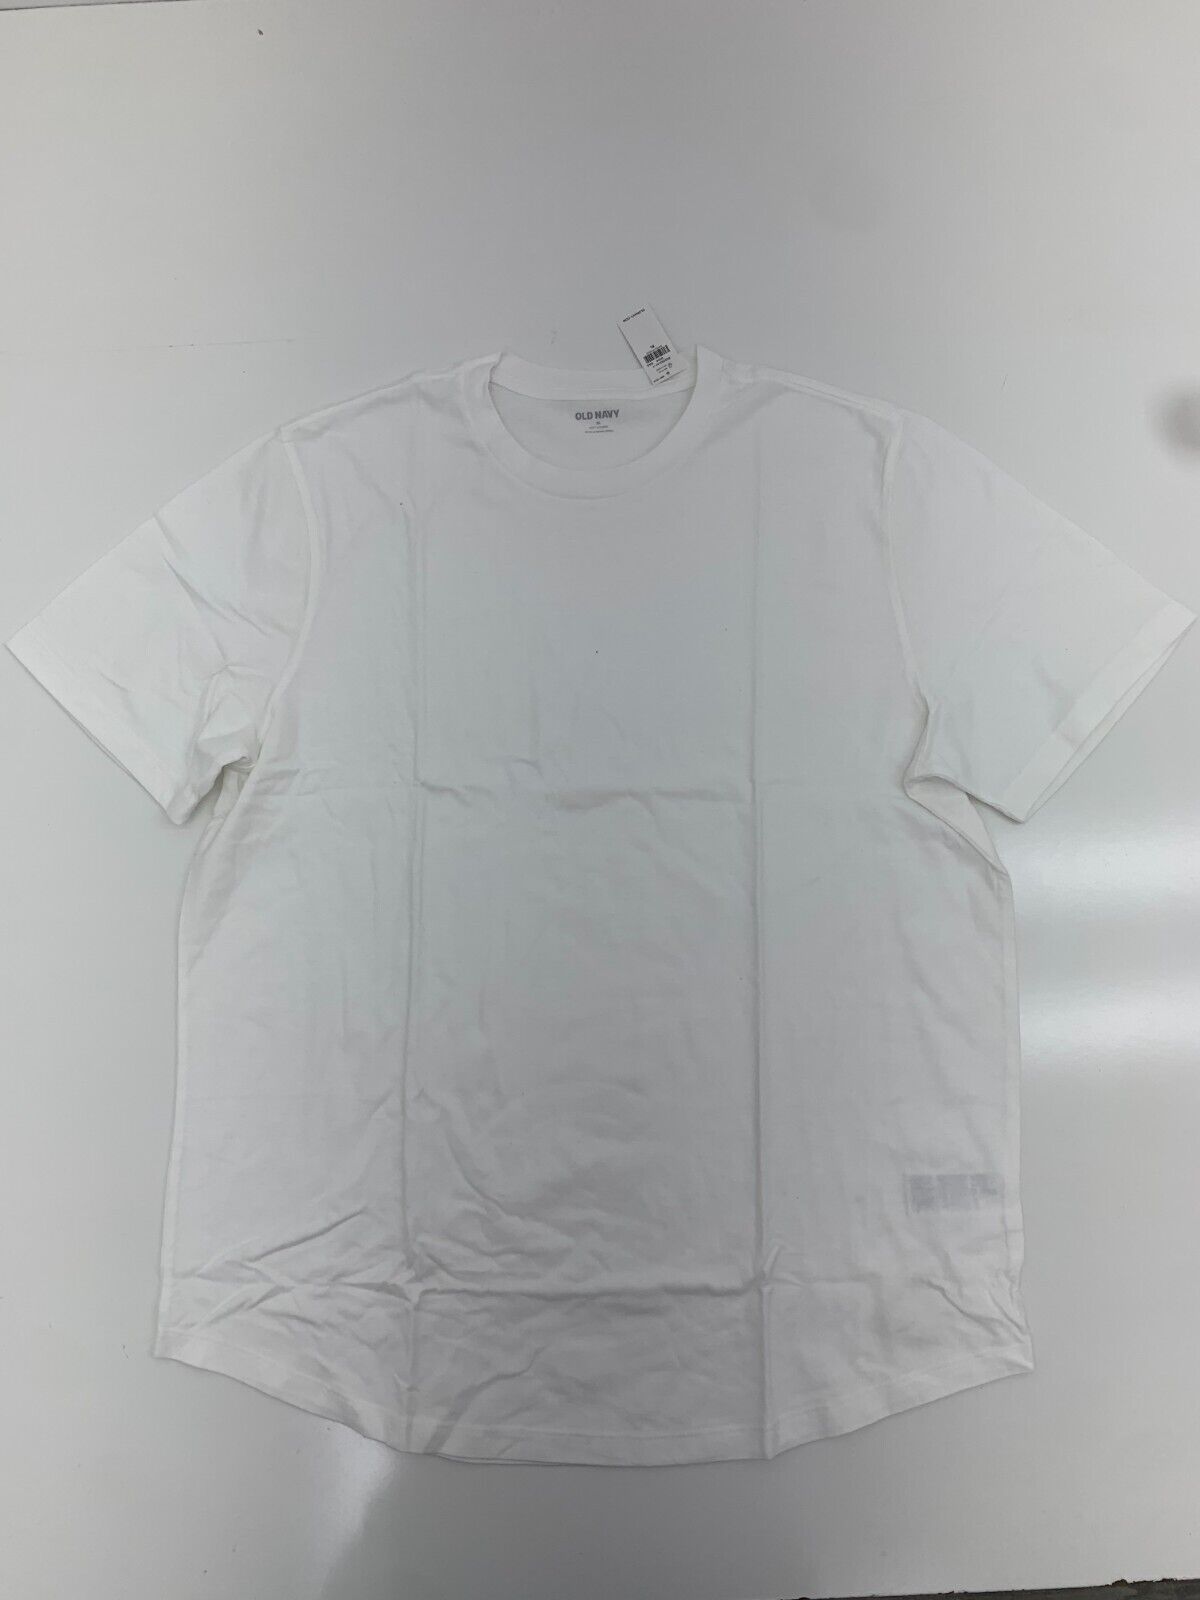 Old Navy Mens White Soft Washed Short Sleeve Shirt Size XL